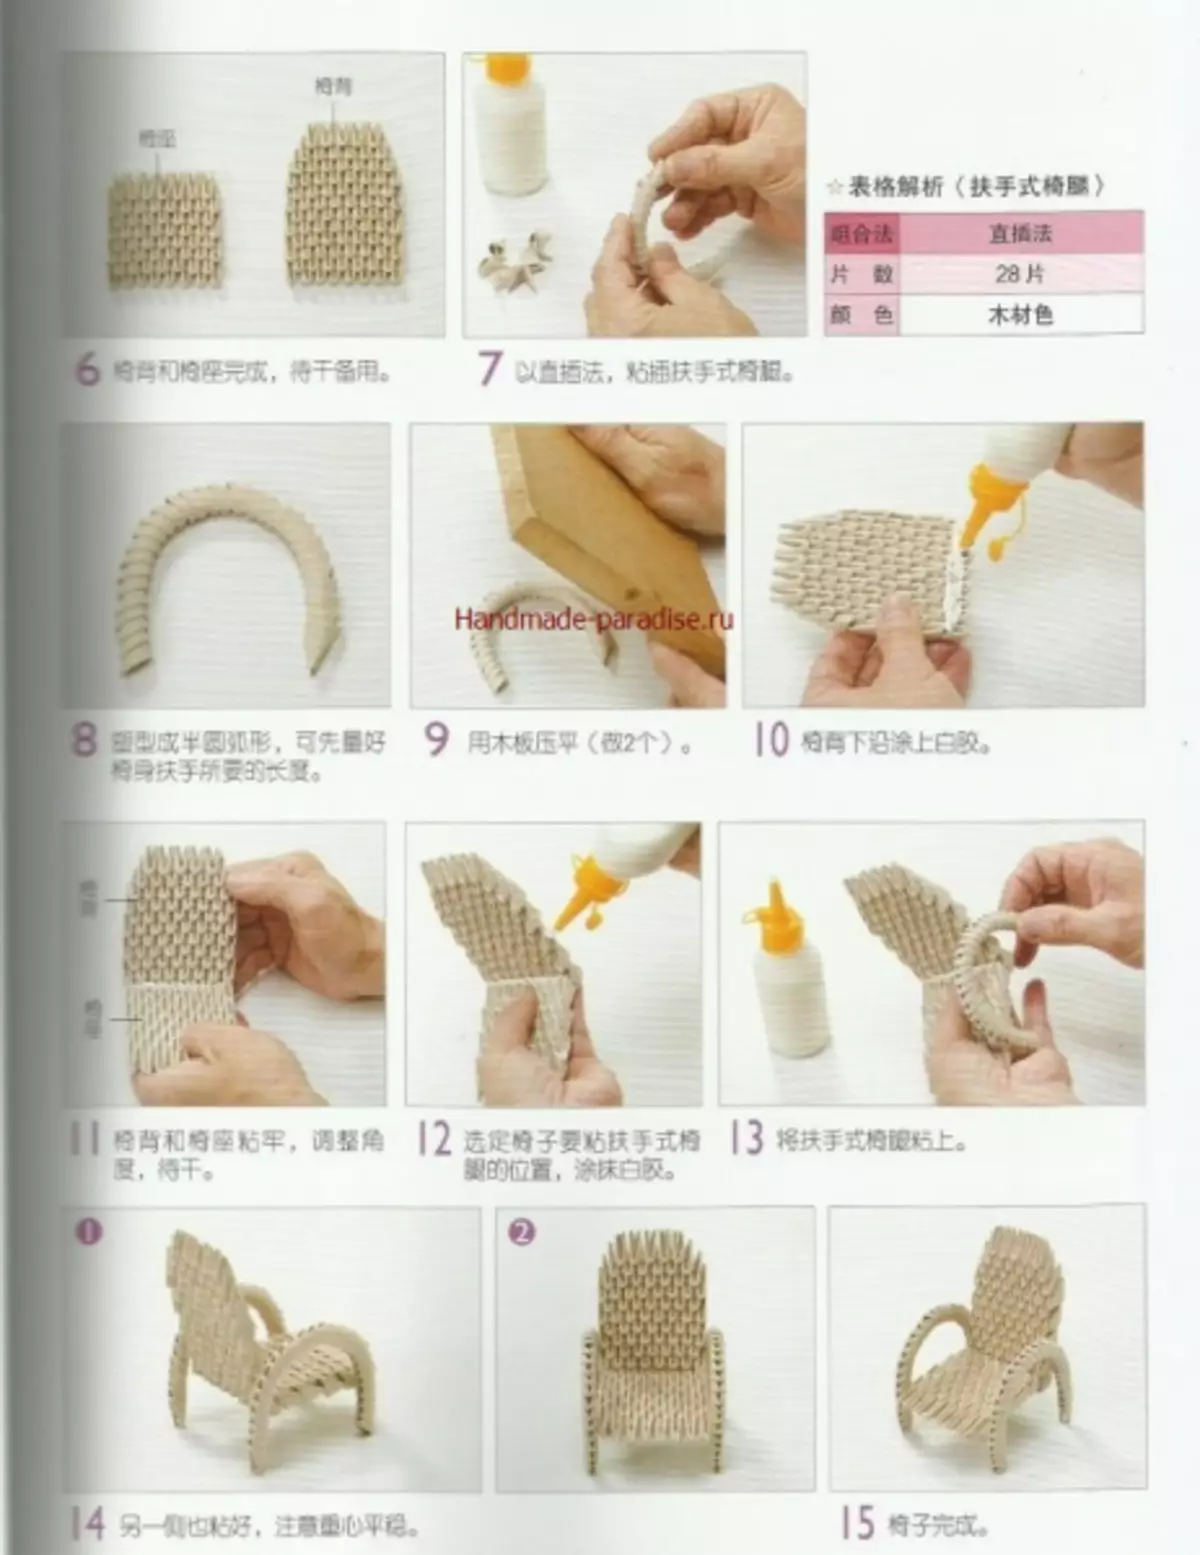 Modular origami. Japanese magazine na may master class